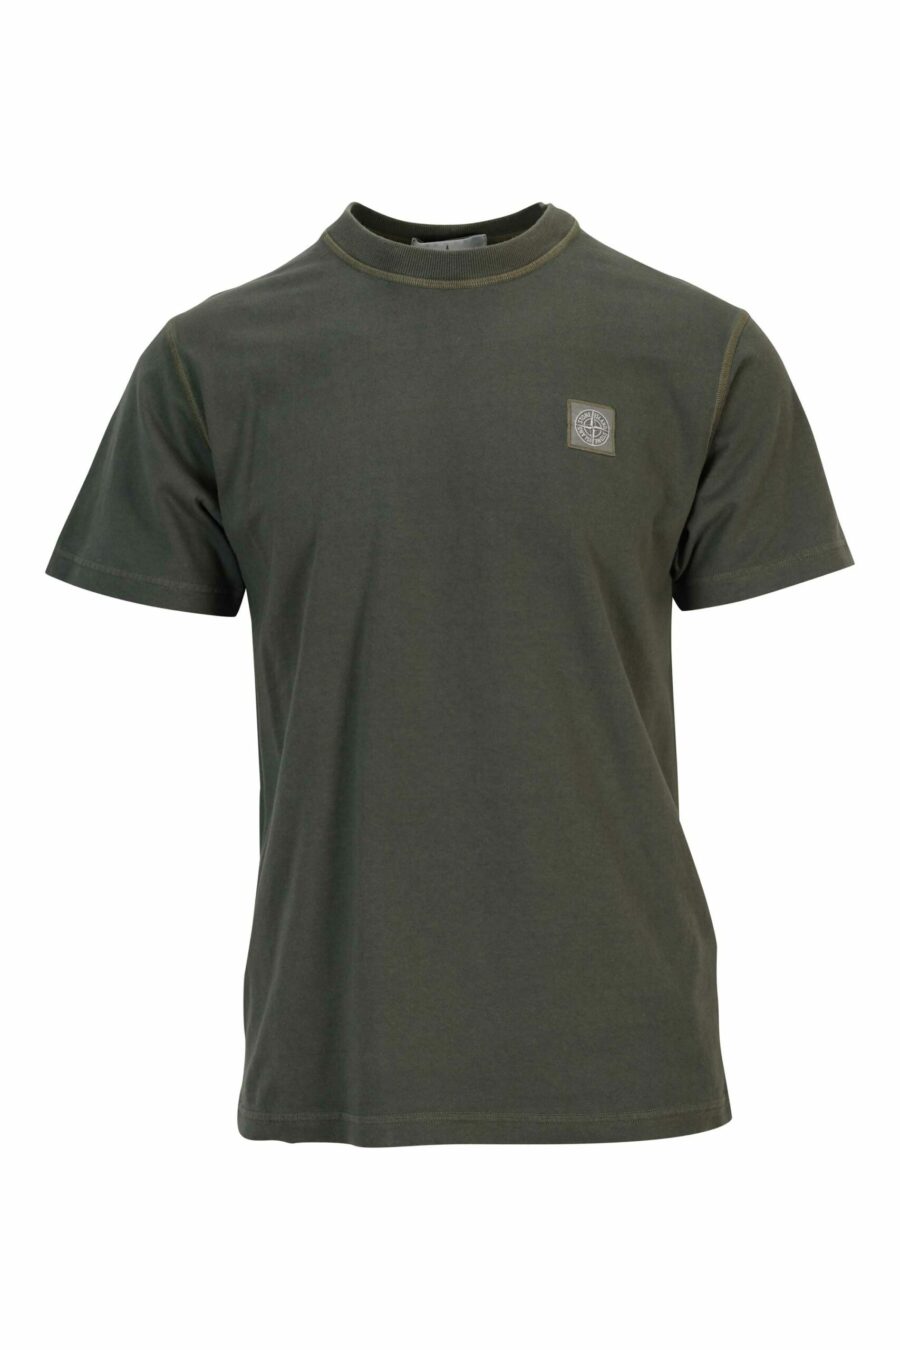 Camiseta verde militar con minilogo brújula - 8052572879333 scaled